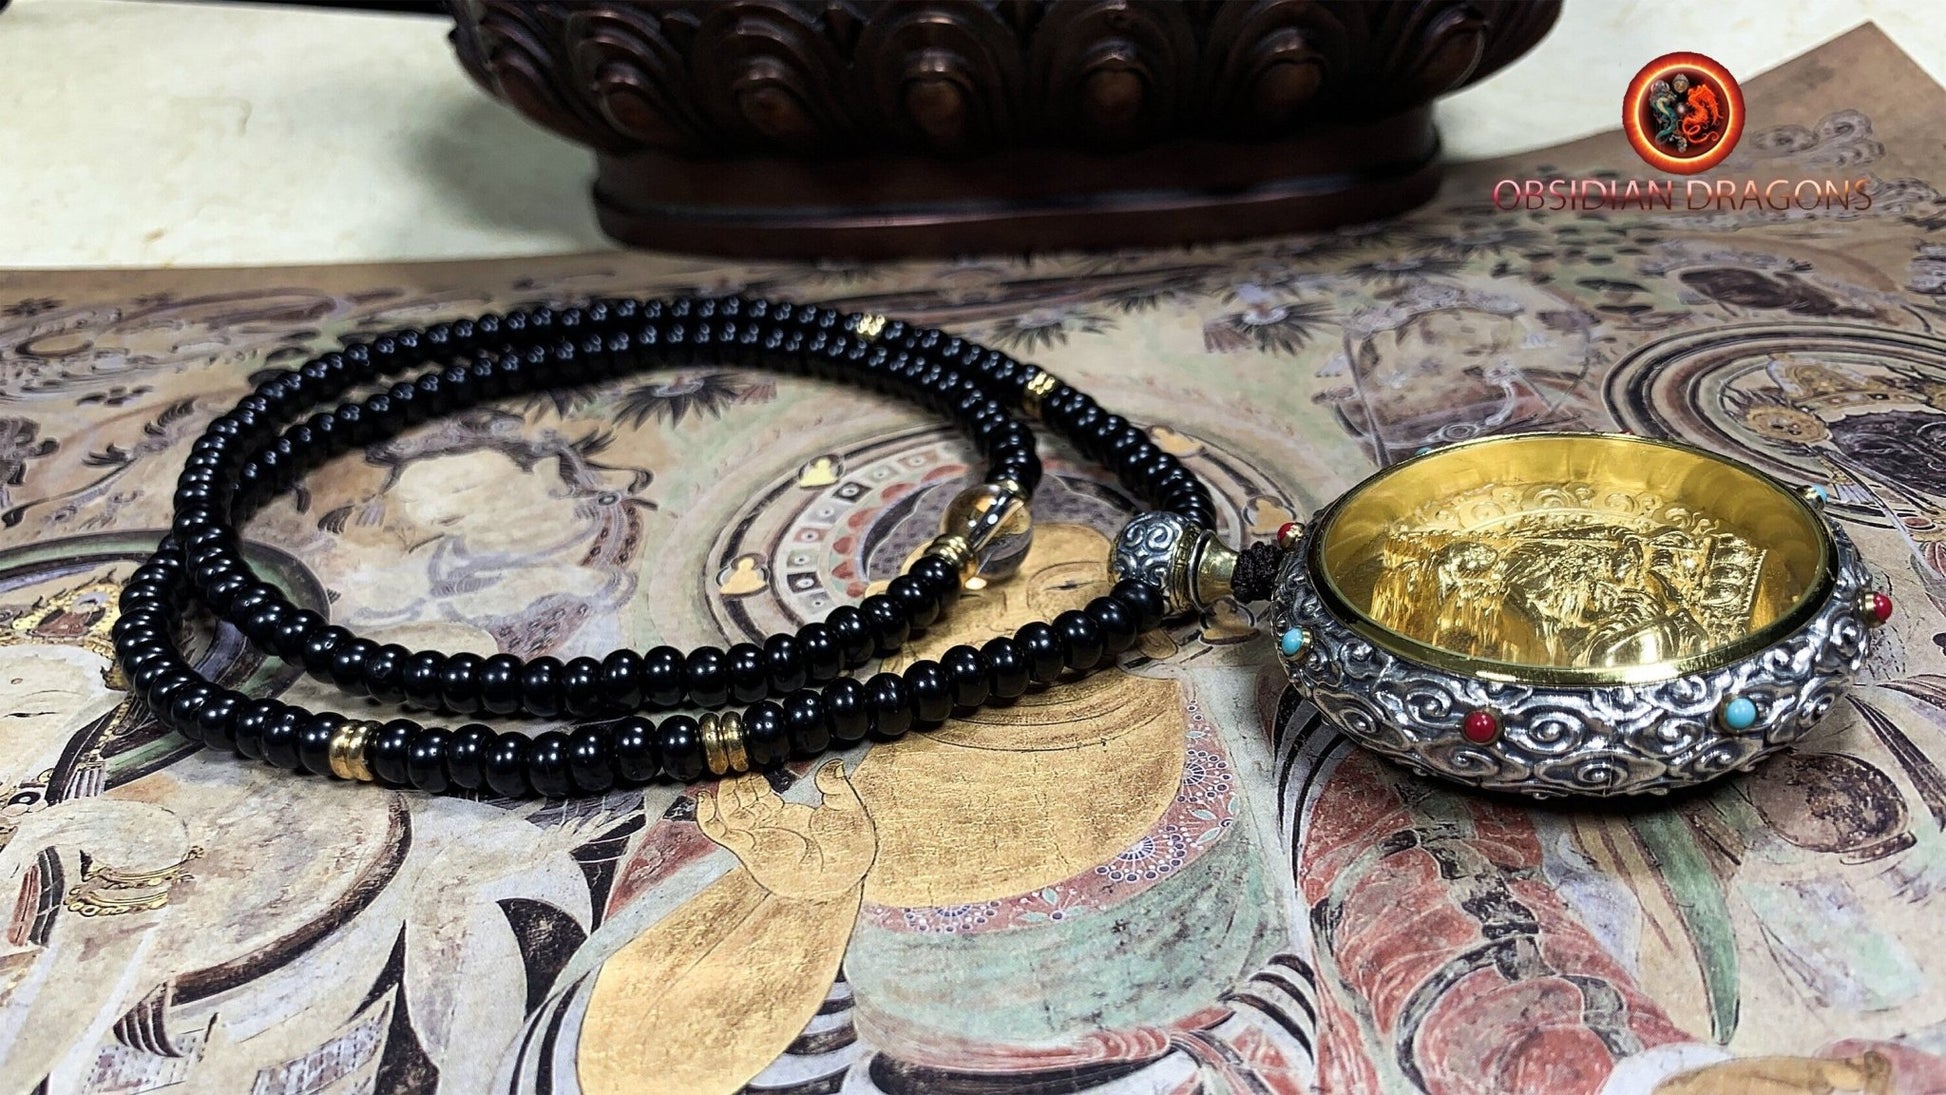 ghau, gau amulette bouddha Sakyamuni, Siddartha Gautama, bouddhisme vajrayana tibetain. Argent 925, plaqué or 24K, deux tailles disponibles - obsidian dragon